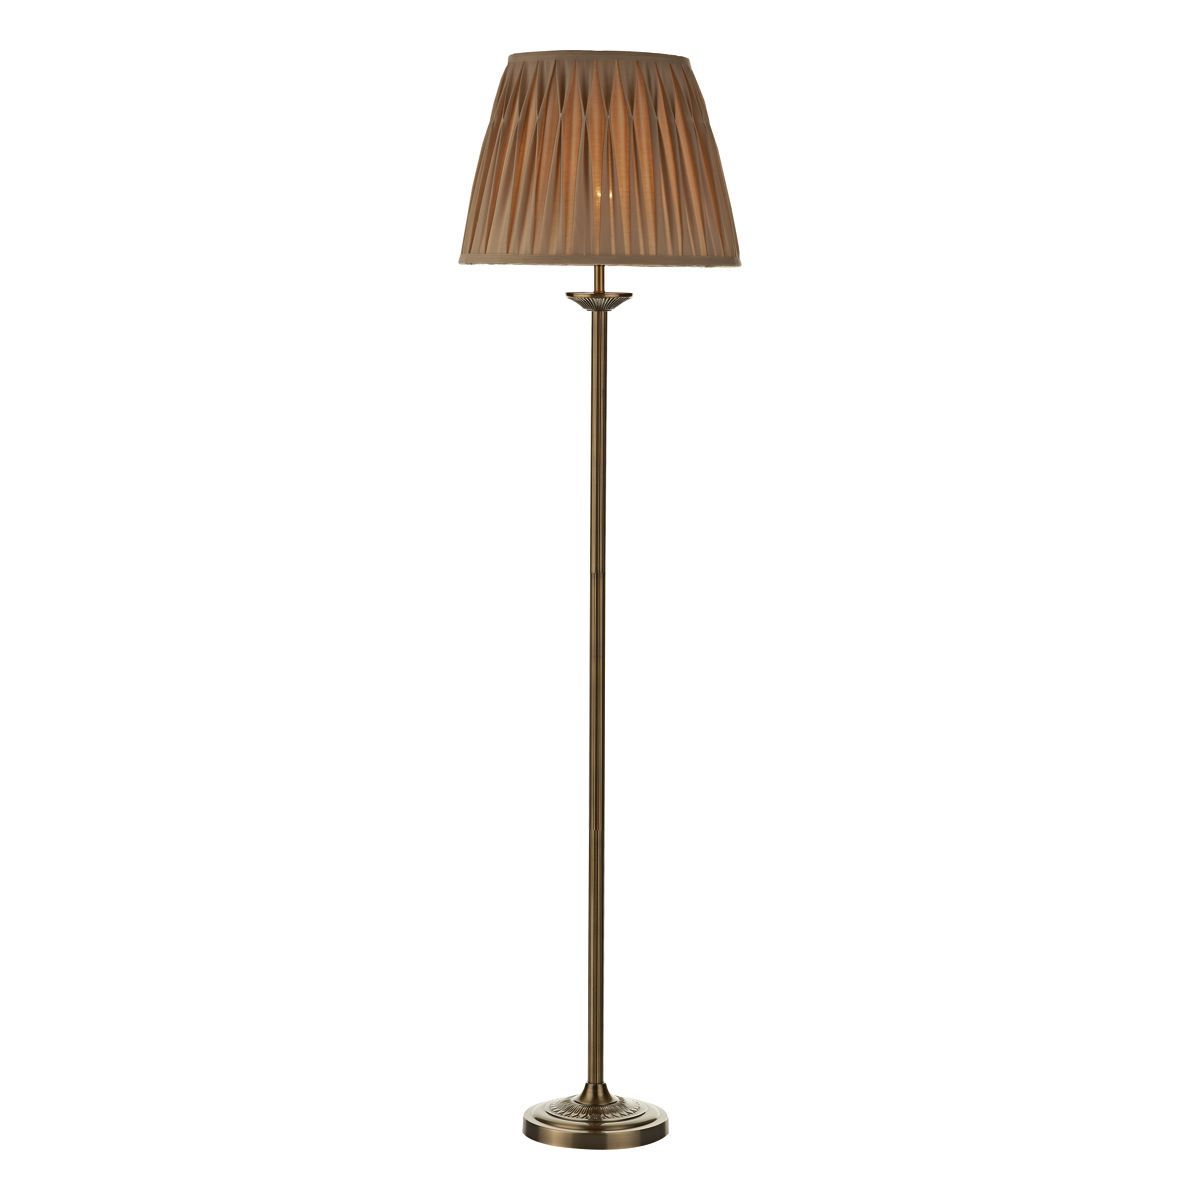 2019 Hatton Floor Lamp Antique Brass Complete With Shade Throughout Antique Brass Floor Lamps (View 10 of 15)